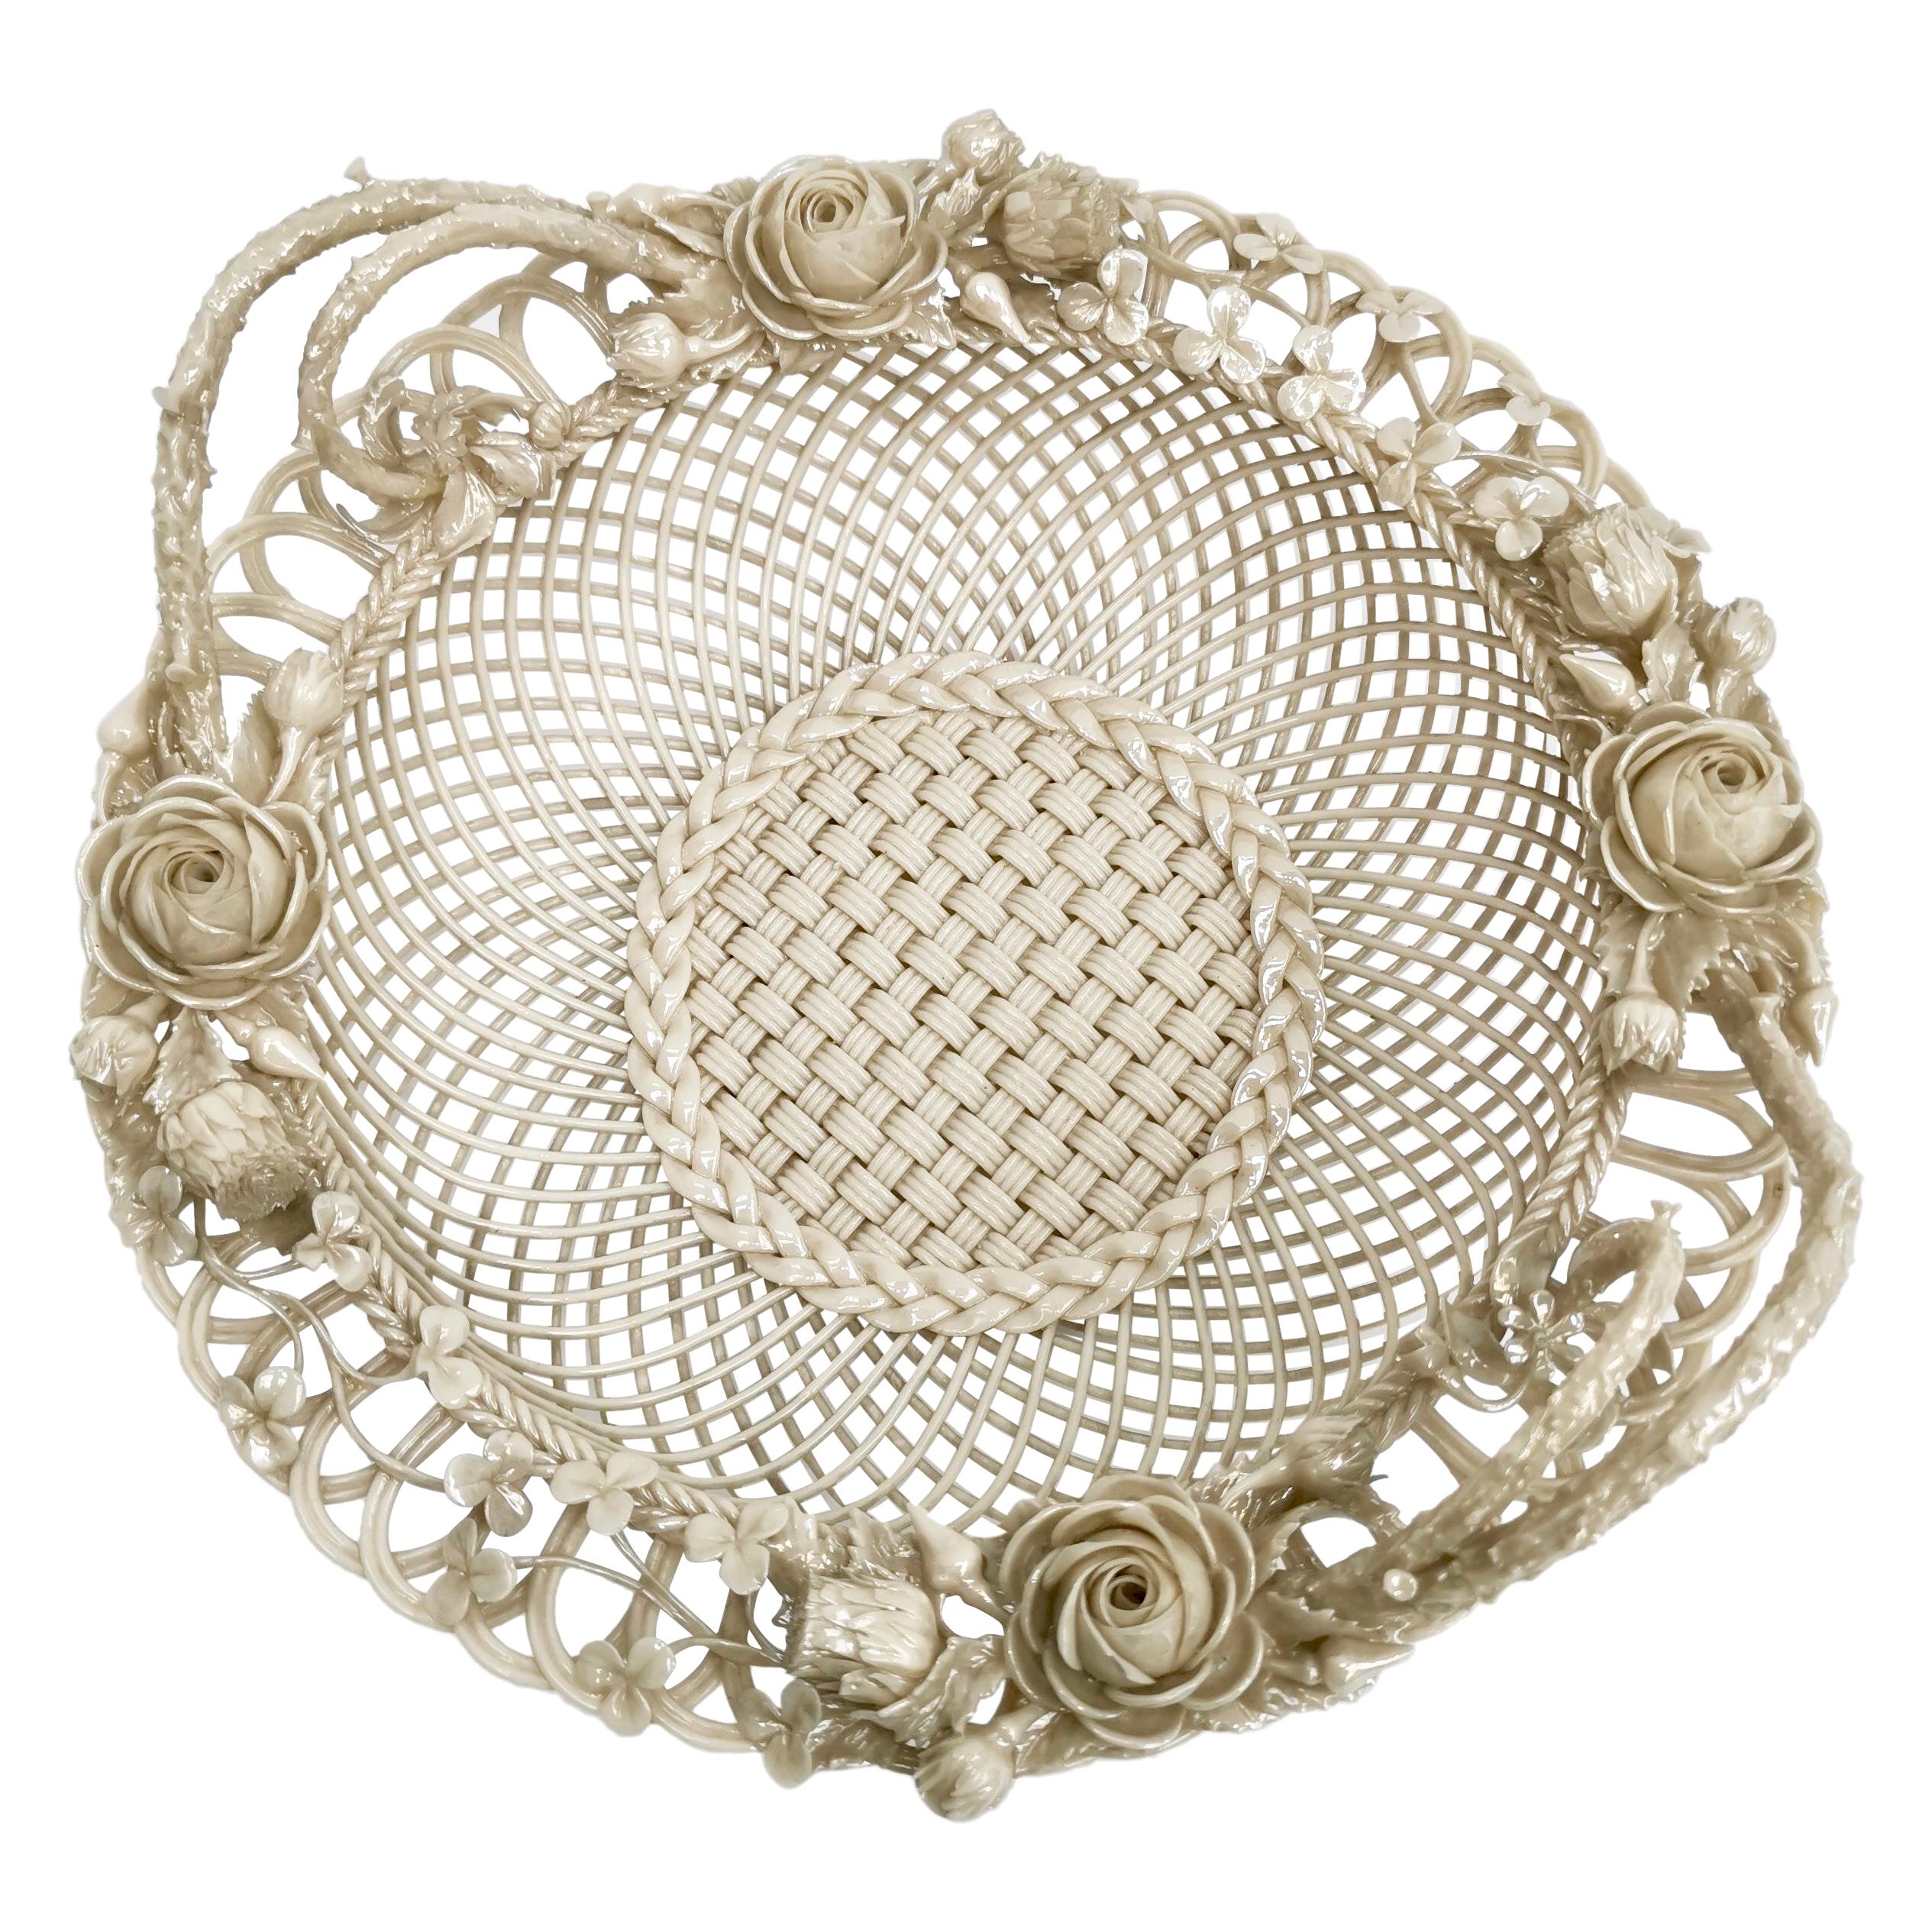 Superb Belleek Romantic White Porcelain Basket, Victorian 1863-1891